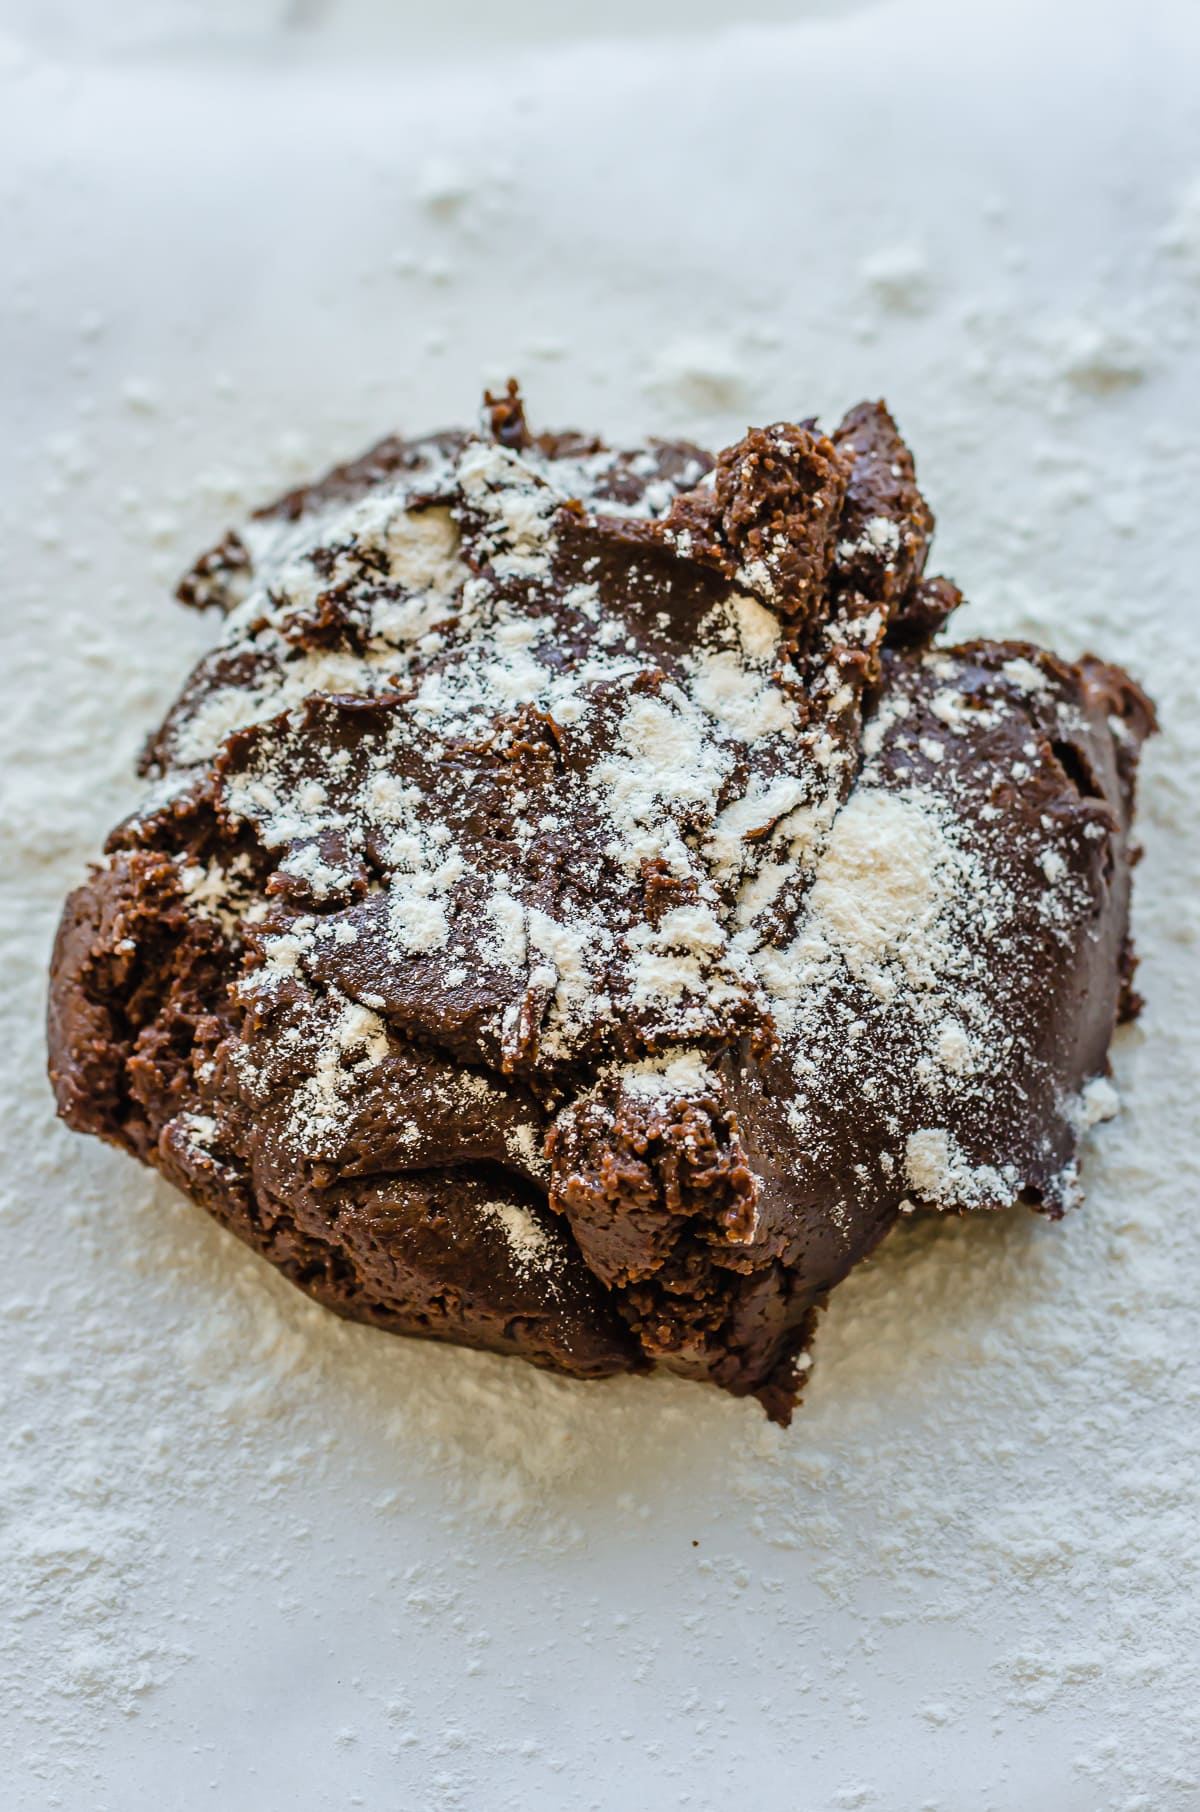 Chocolate cookie dough on a floured surface.